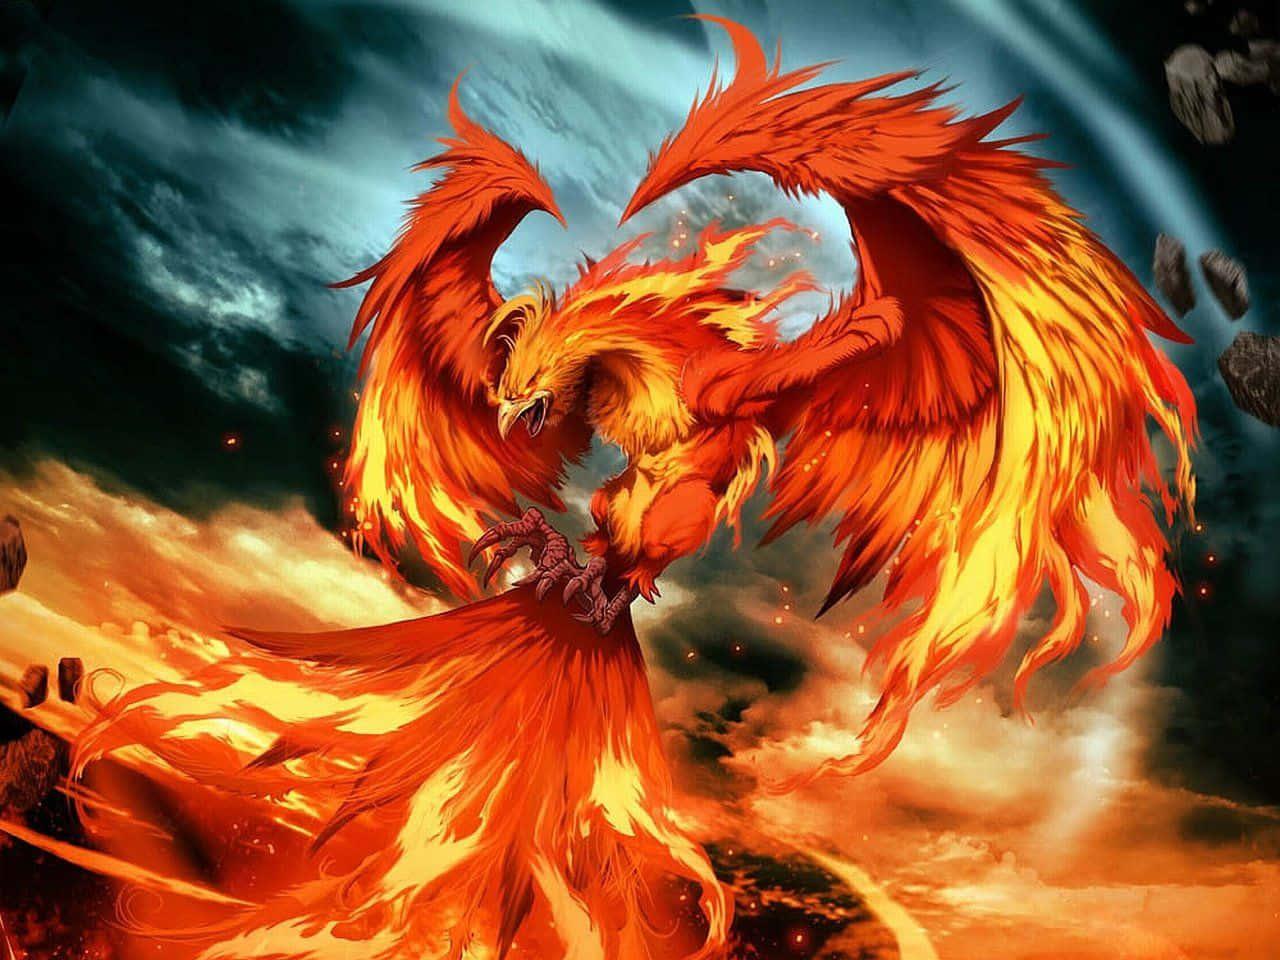 Download a fiery phoenix flying in the sky | Wallpapers.com